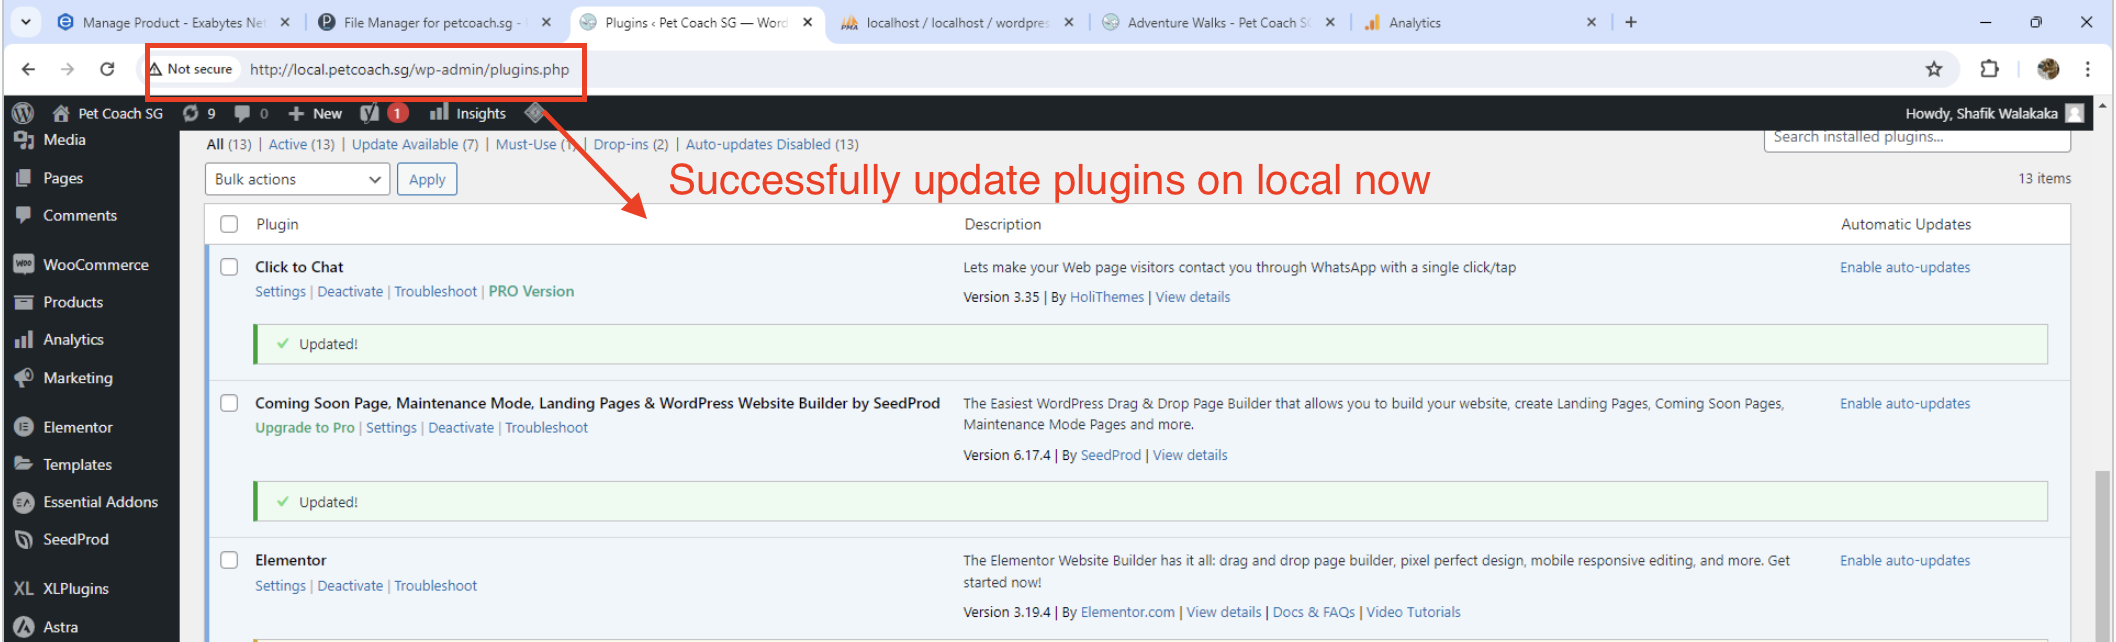 image showing successful plugin update locally